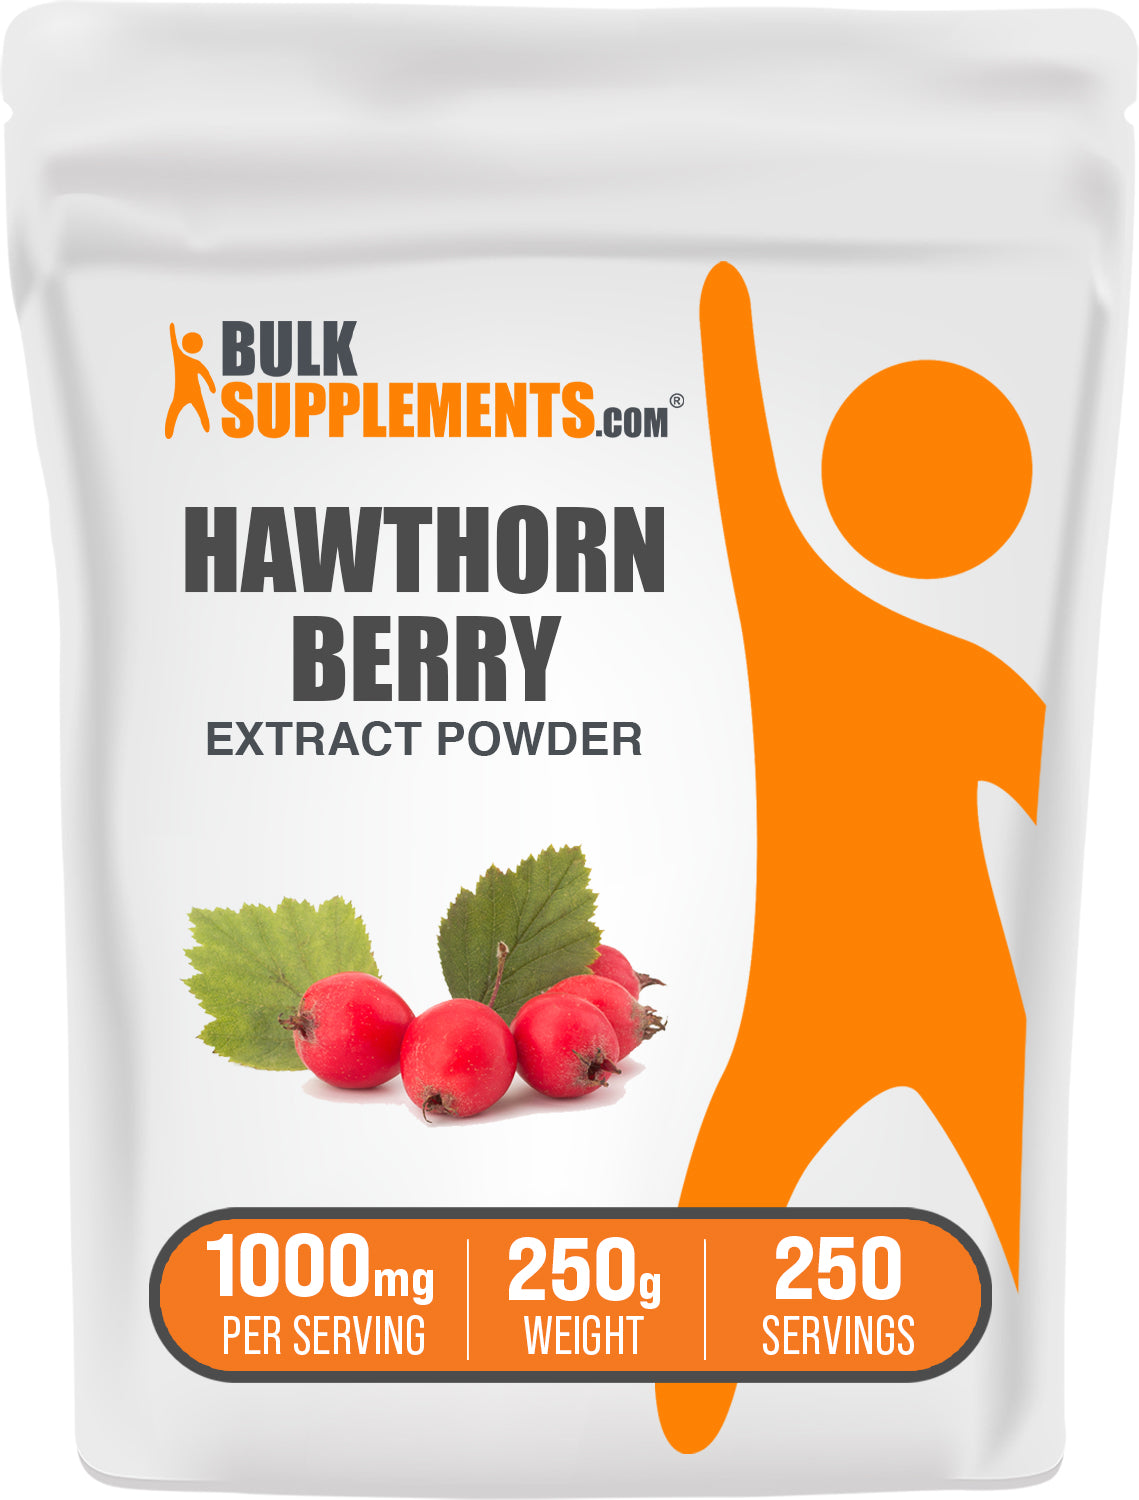 BulkSupplements.com Hawthorn Berry Extract Powder 250g bag image